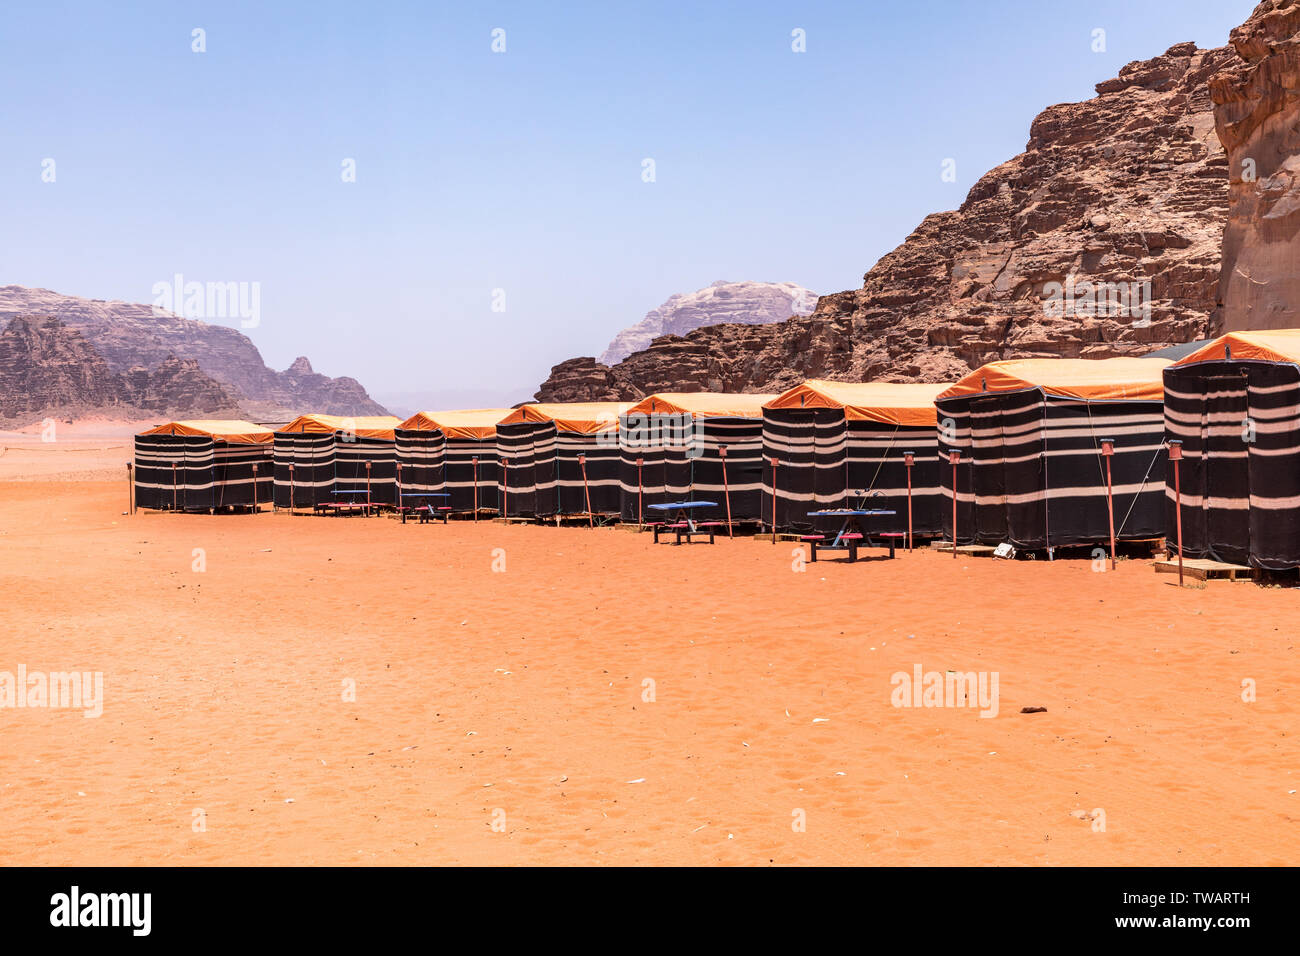 Tourist tents in Wadi Rum dessert. Jordan. Middle East. Stock Photo